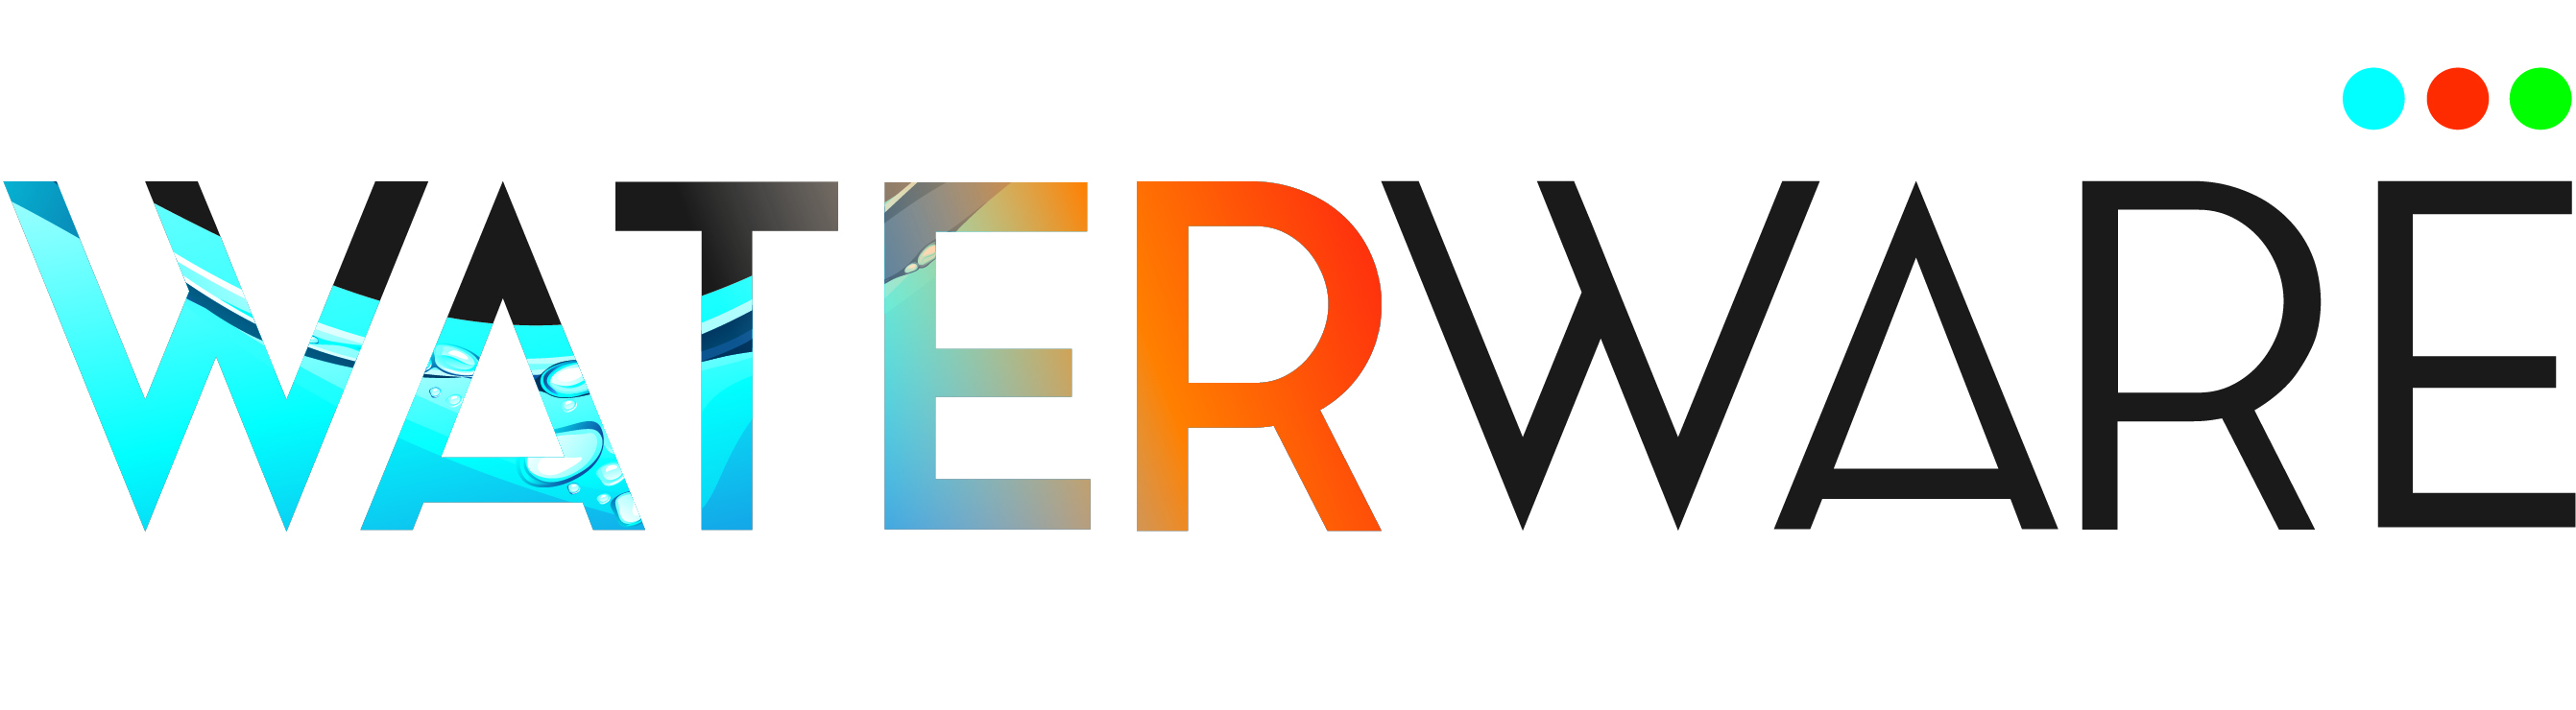 Waterware logo Final 2017